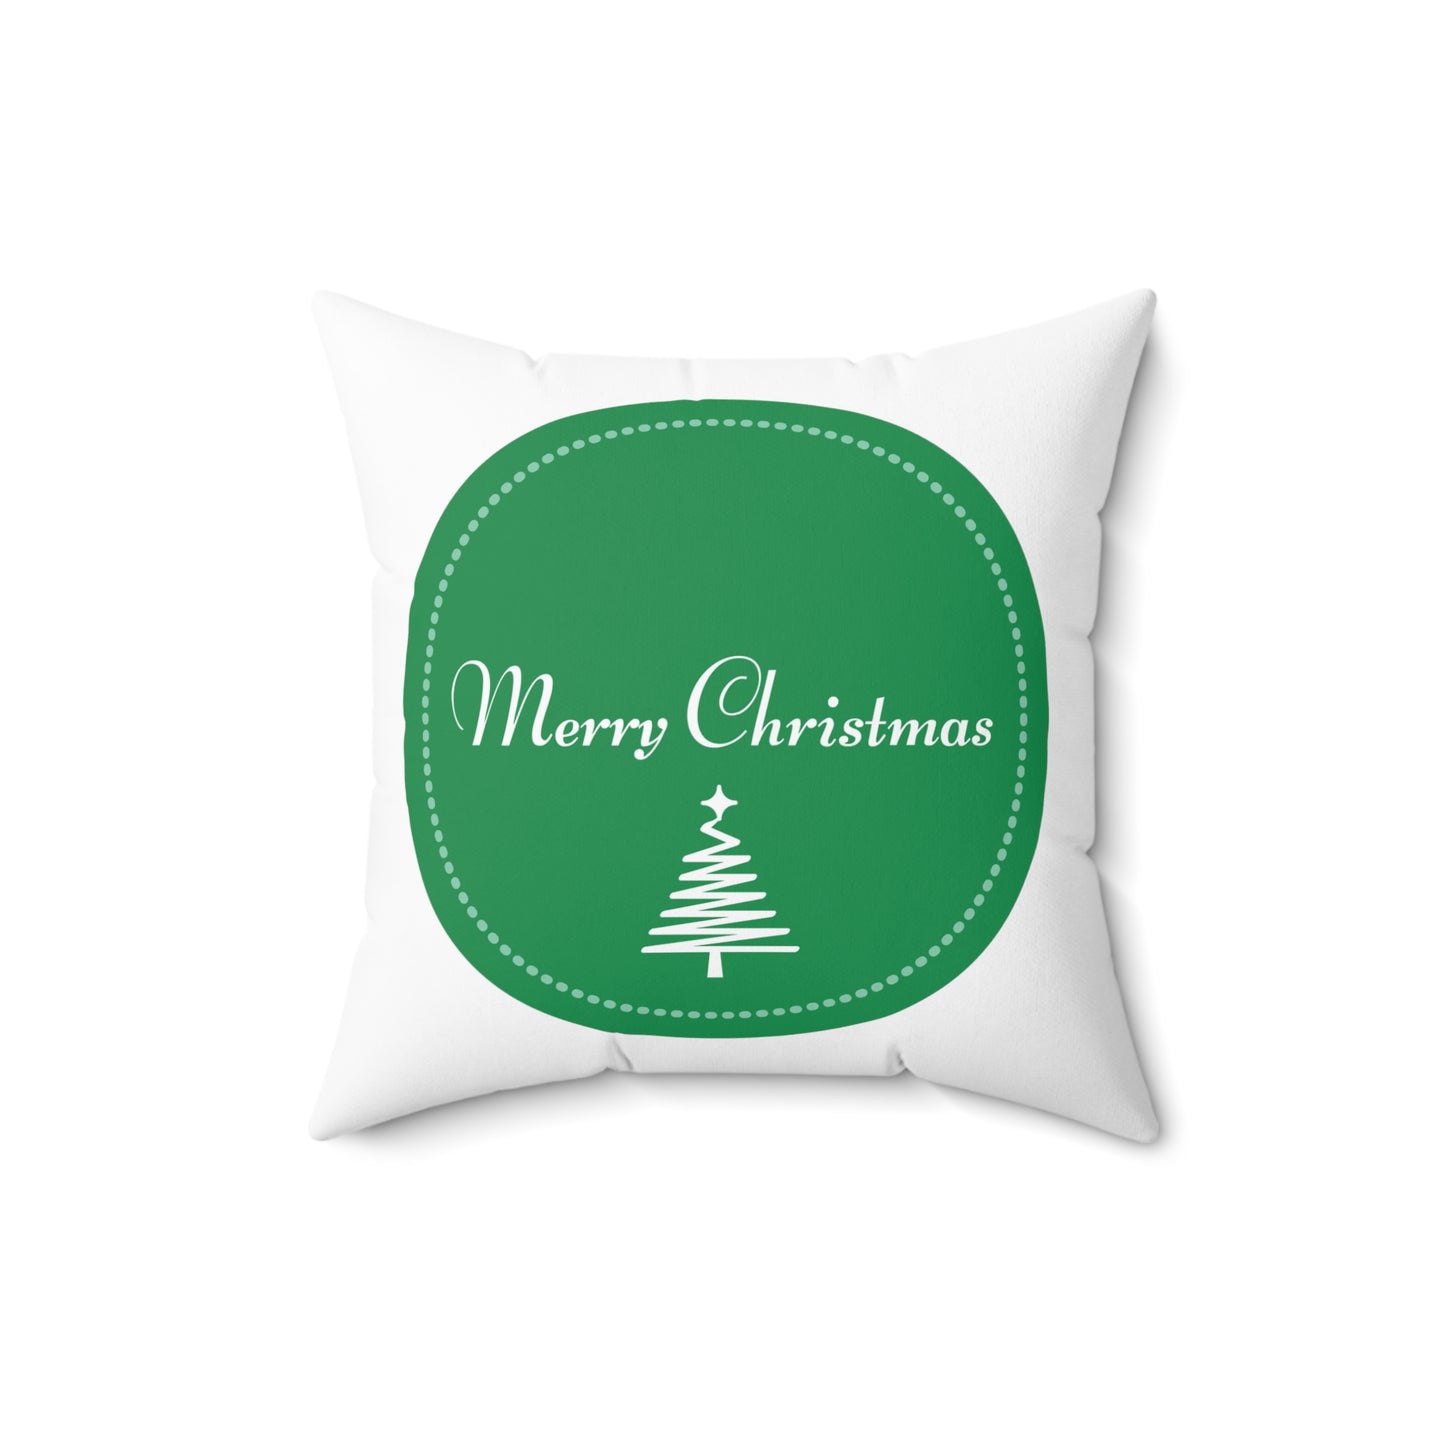 Merry Christmas Green Spun Polyester Square Pillow